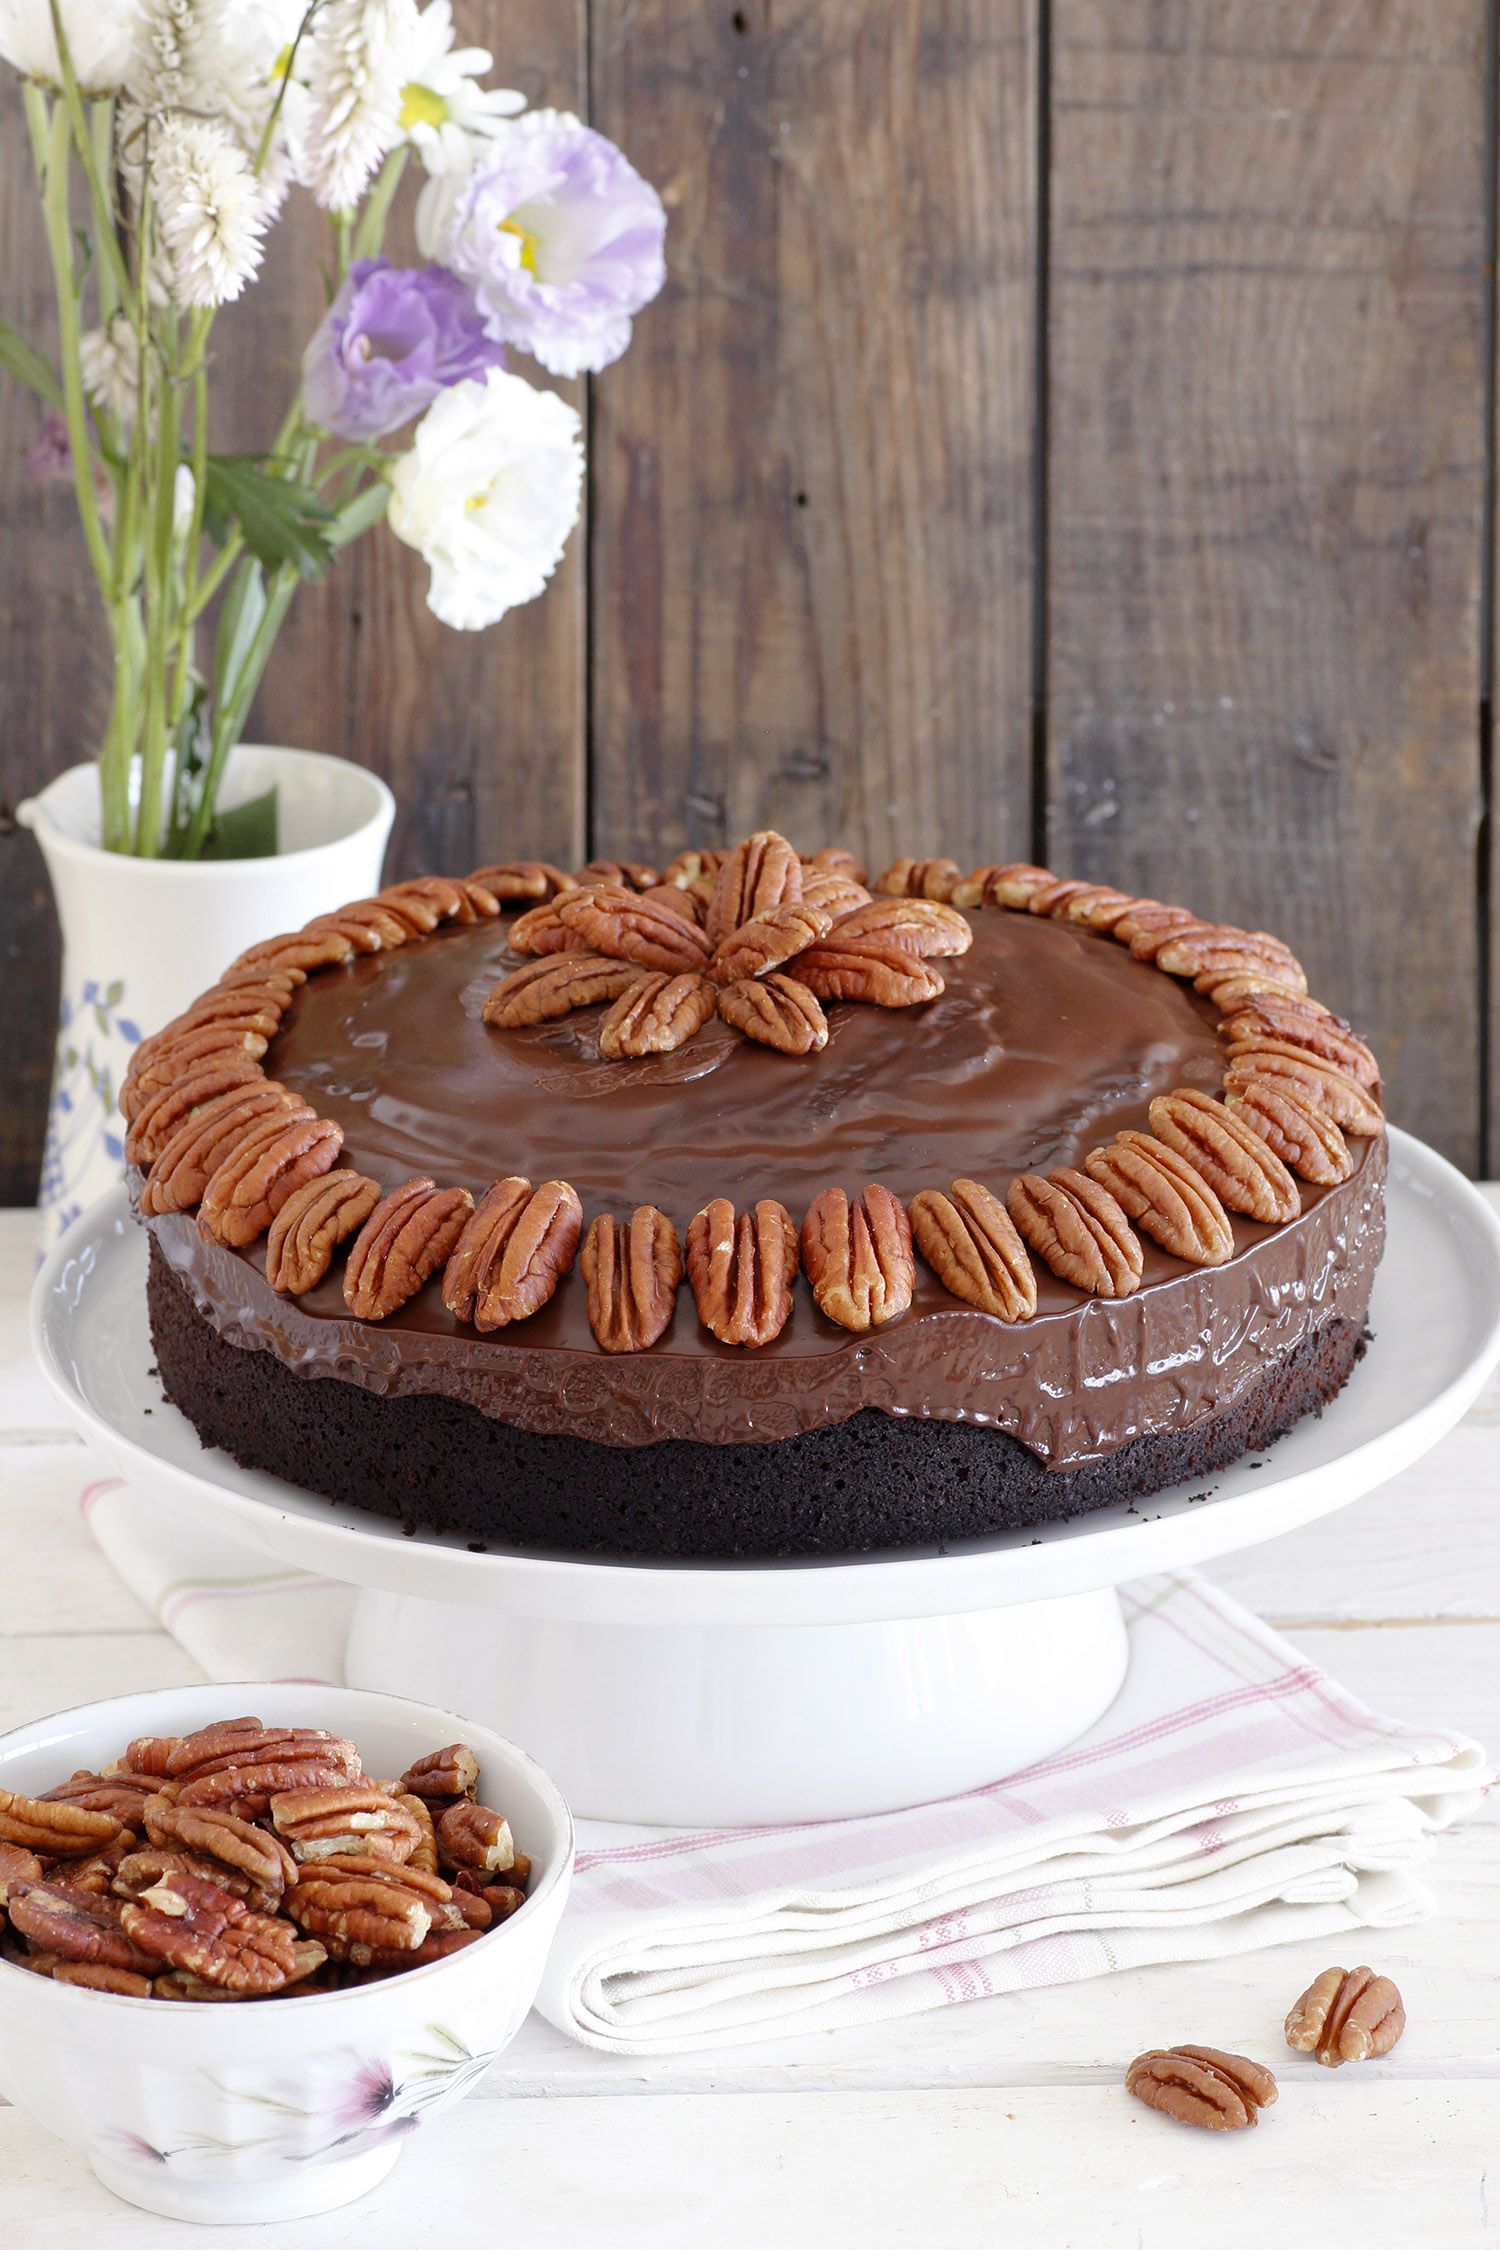 Share more than 76 hebbars kitchen cake super hot - in.daotaonec